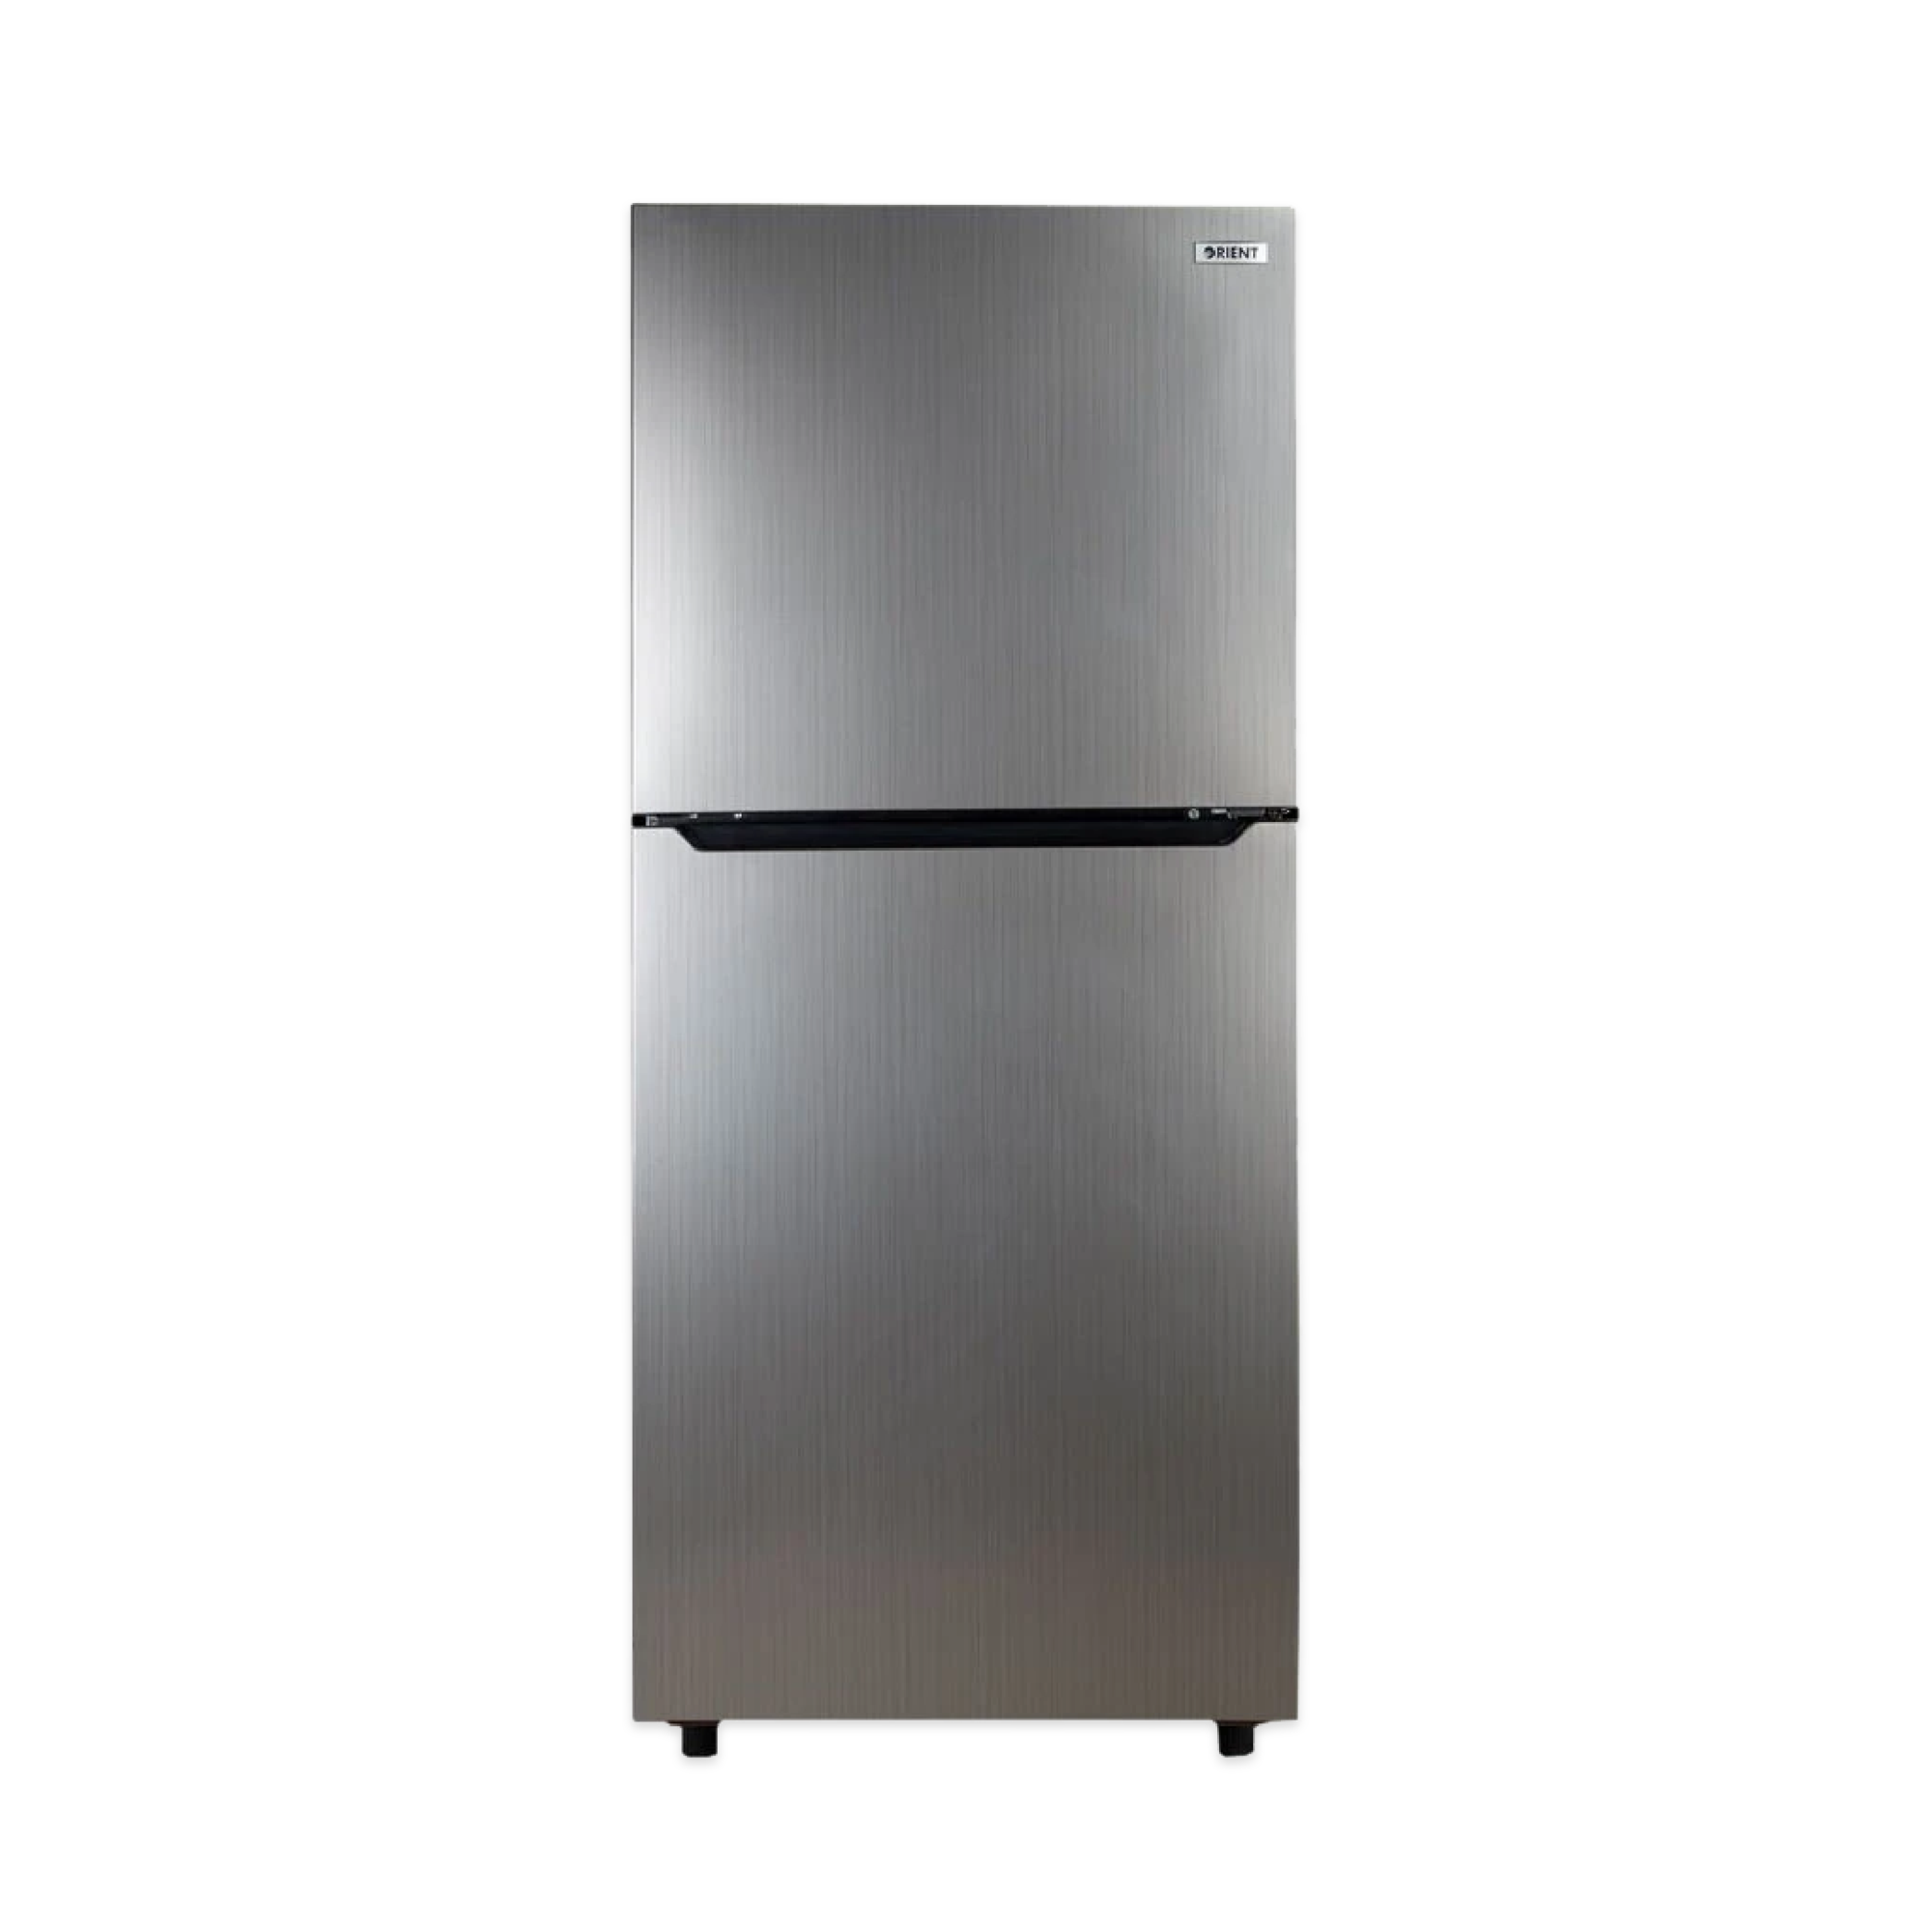 Grand 385 Liters Refrigerators